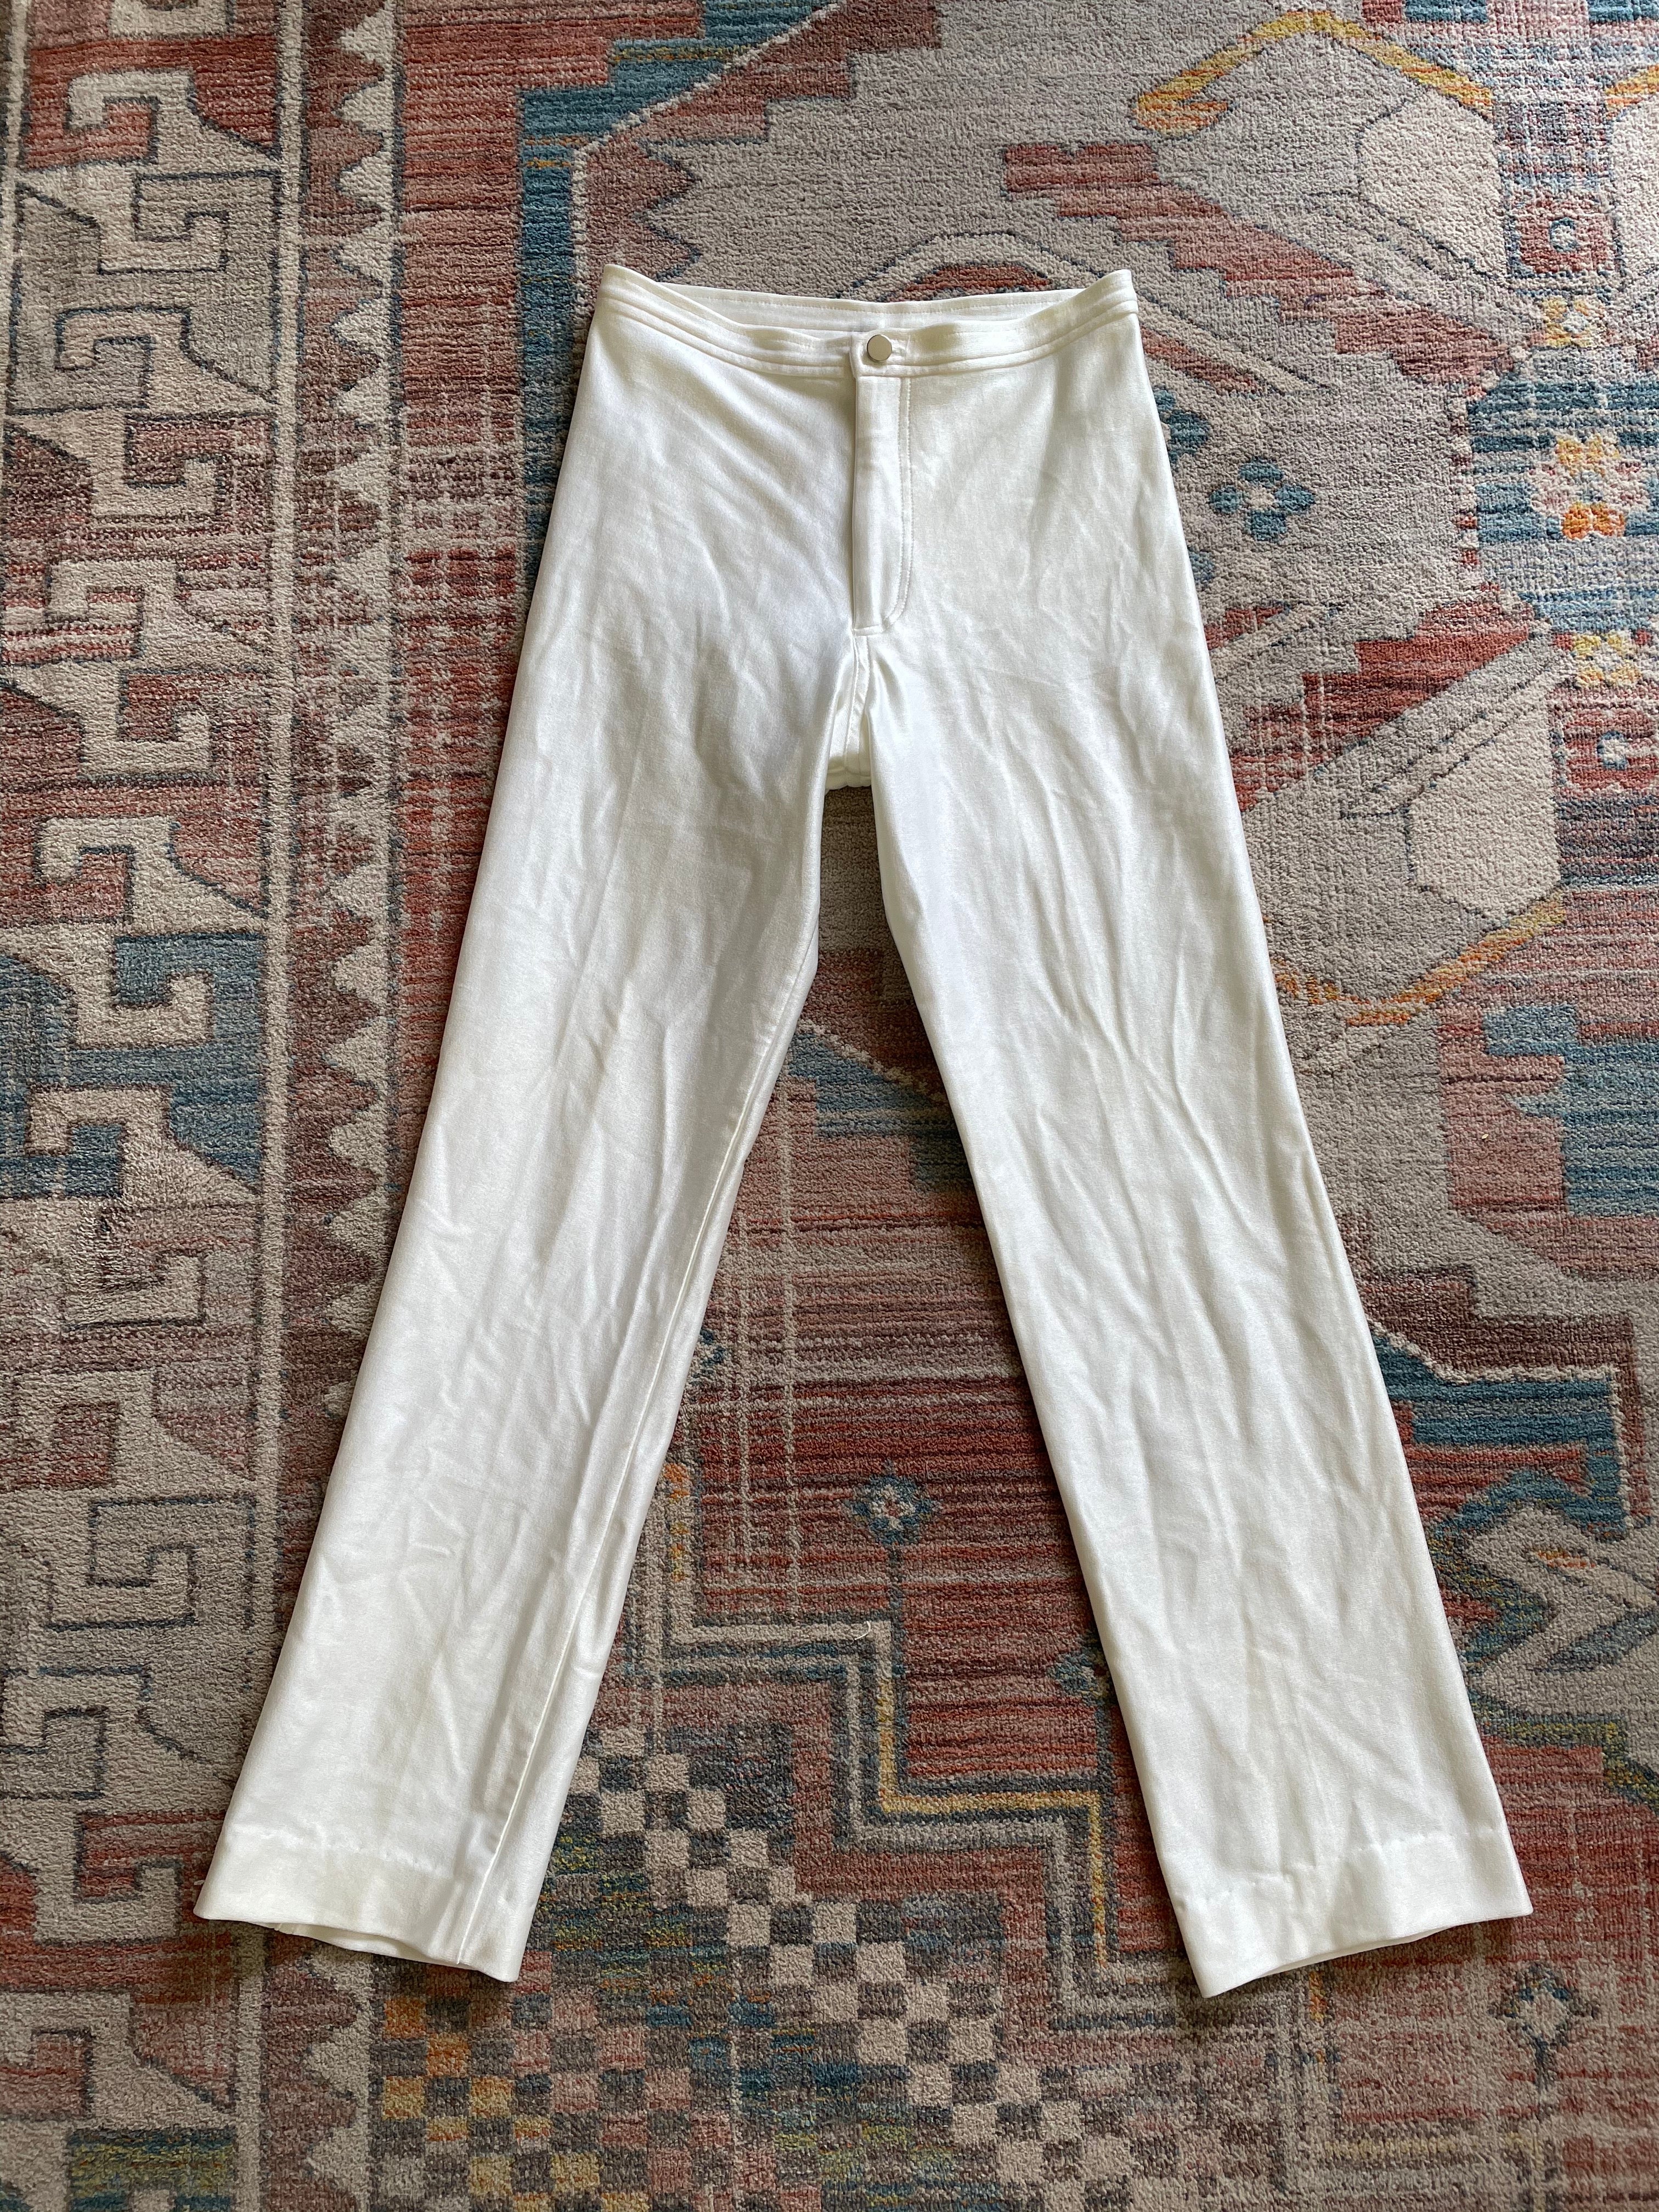 70s Gold Disco Pants S/M, Vintage 1970s Original Spandex Great Escape  Fredericks Pants, Shiny Champagne Skin Tight Leggings Size 4-6 1980s -   Canada